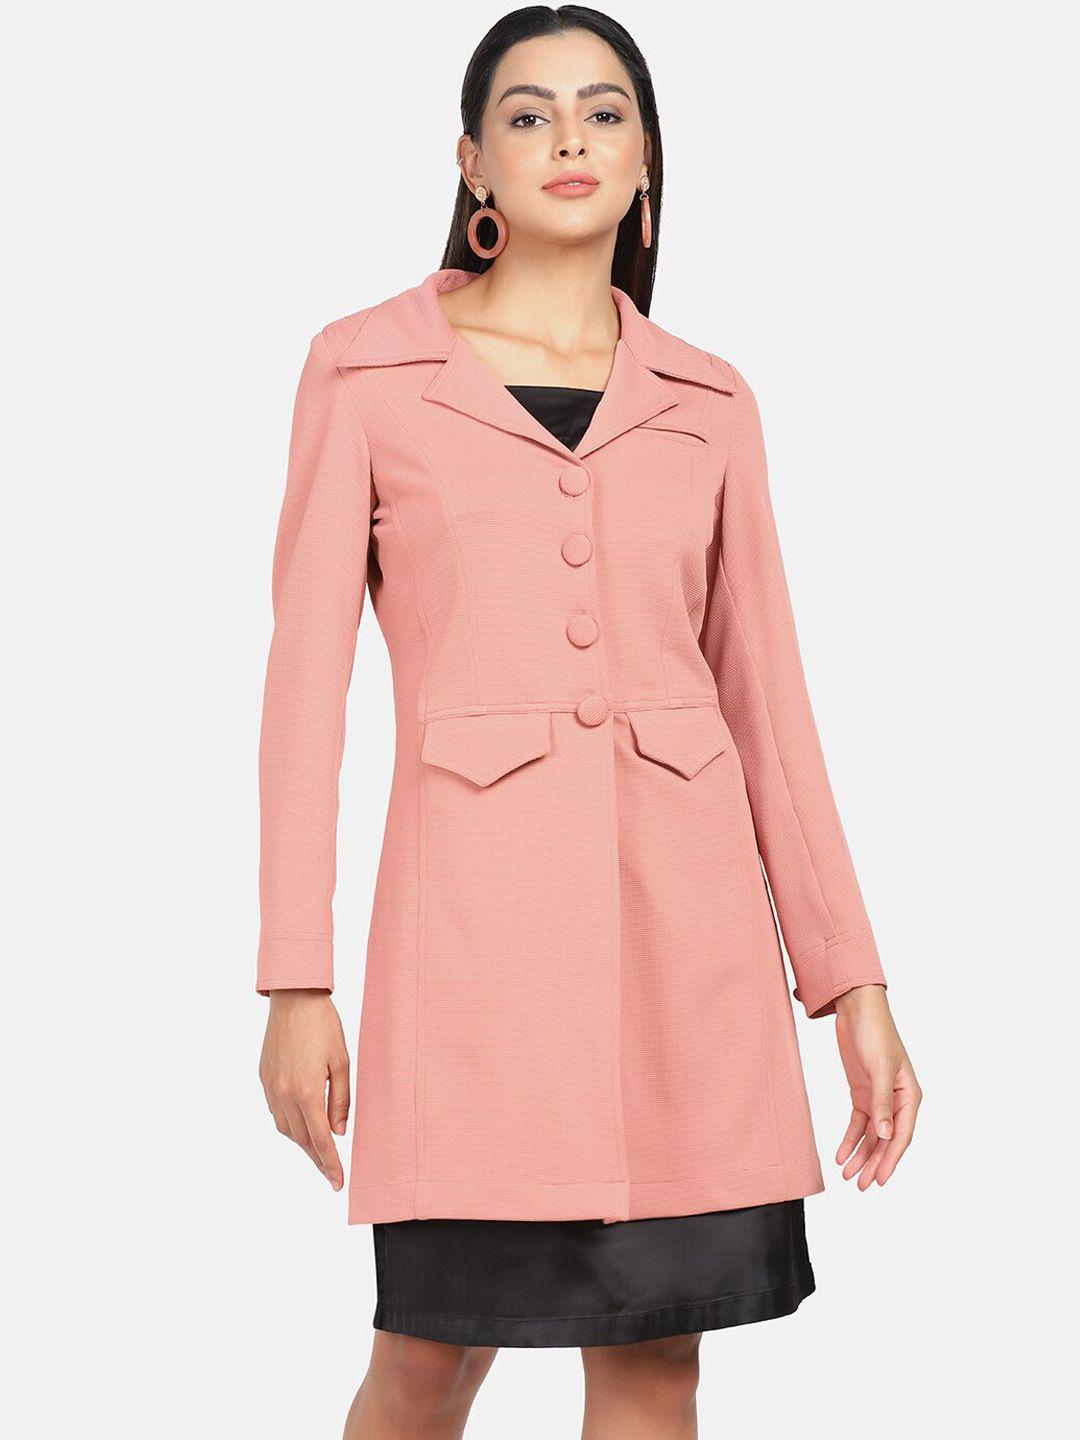 powersutra women peach-coloured longline tailored jacket